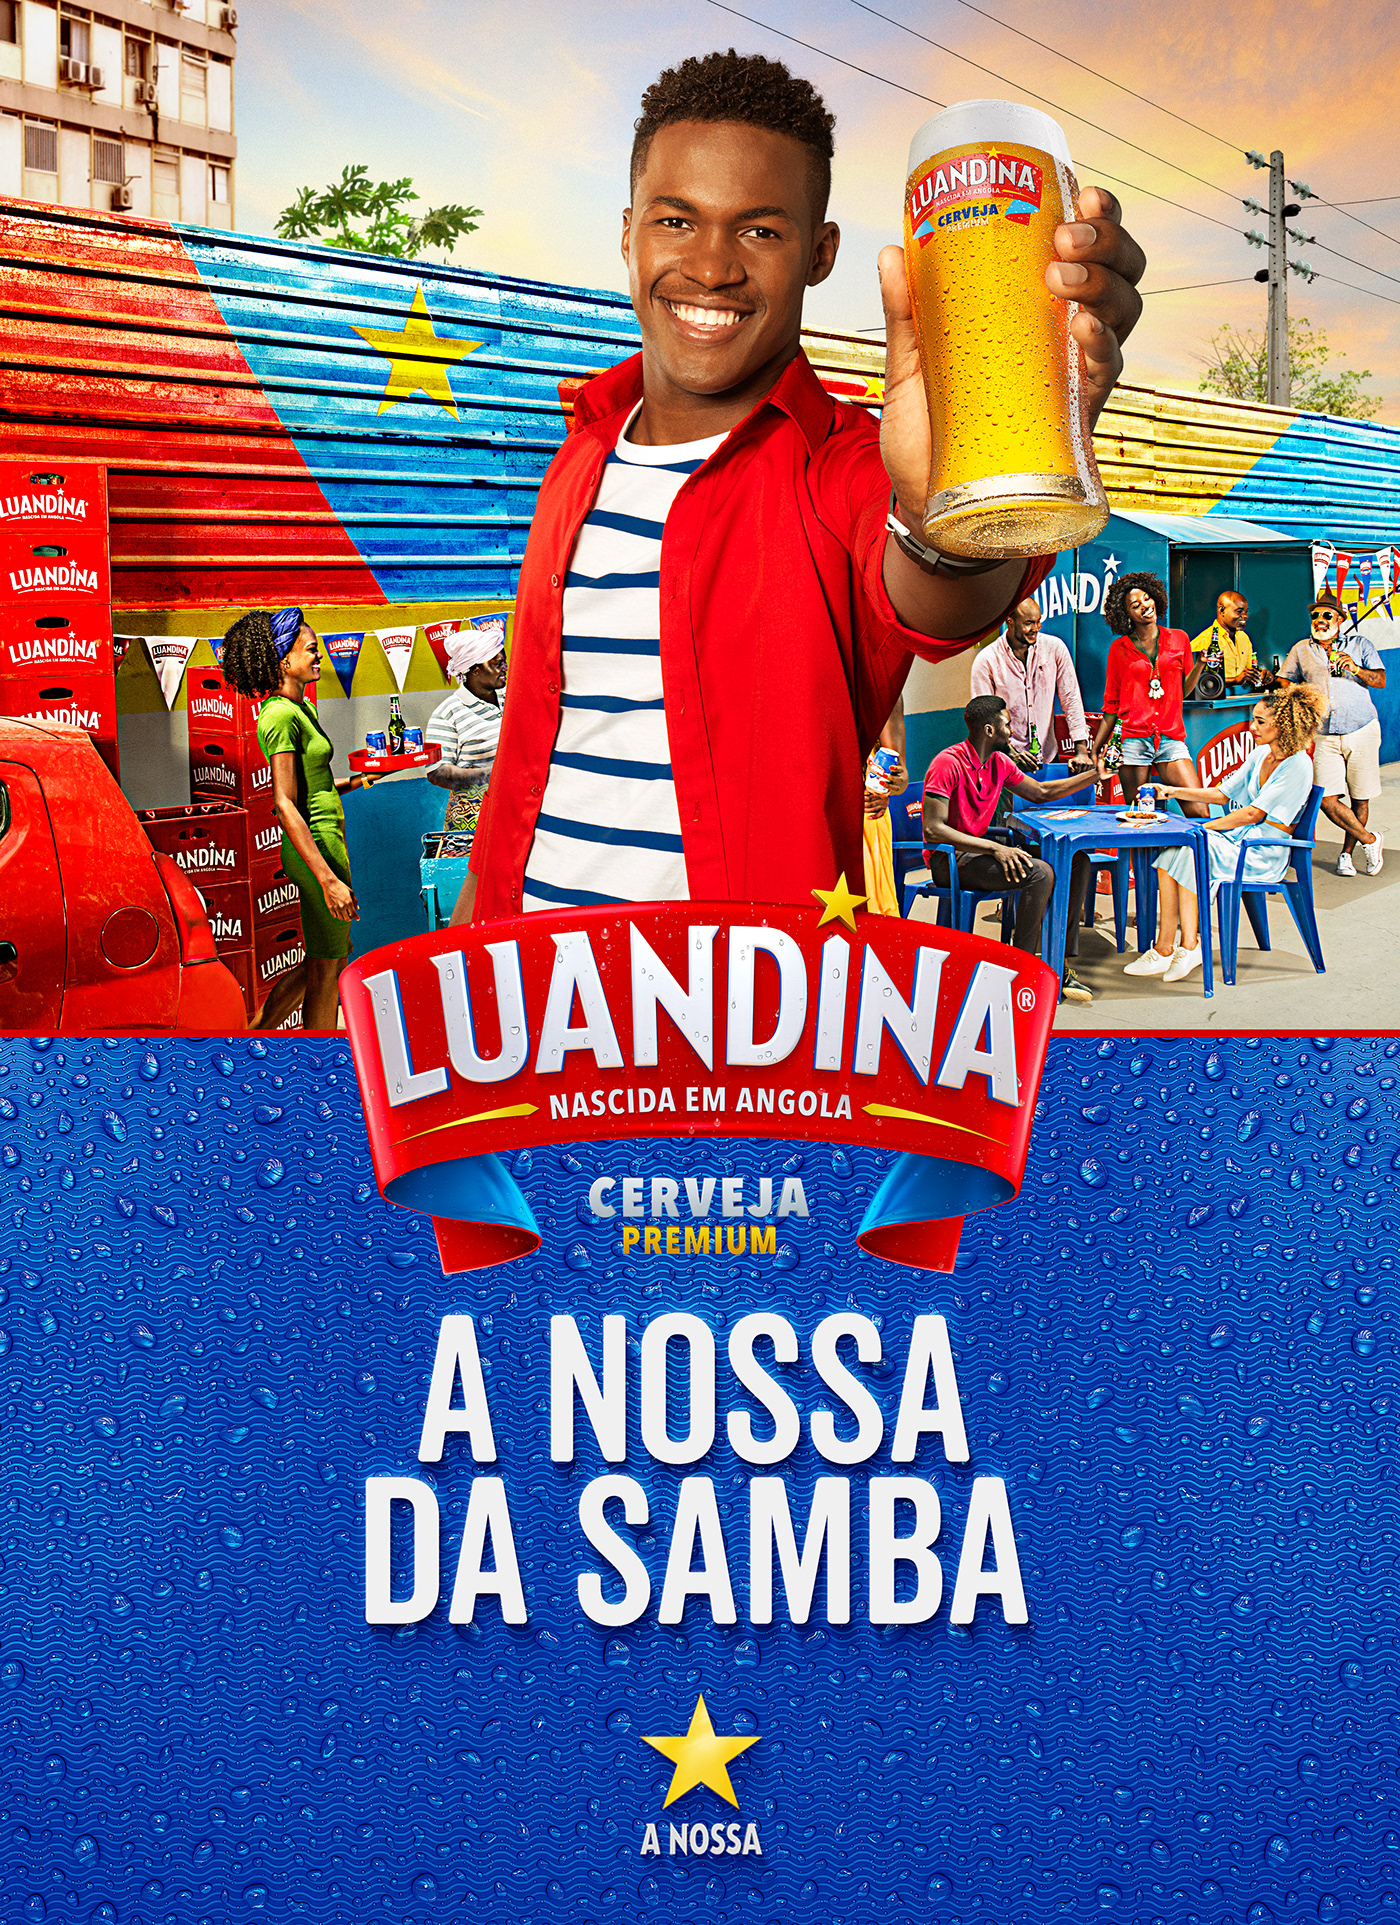 angola africa beer happy blue streets LUANDINA Born outdoors